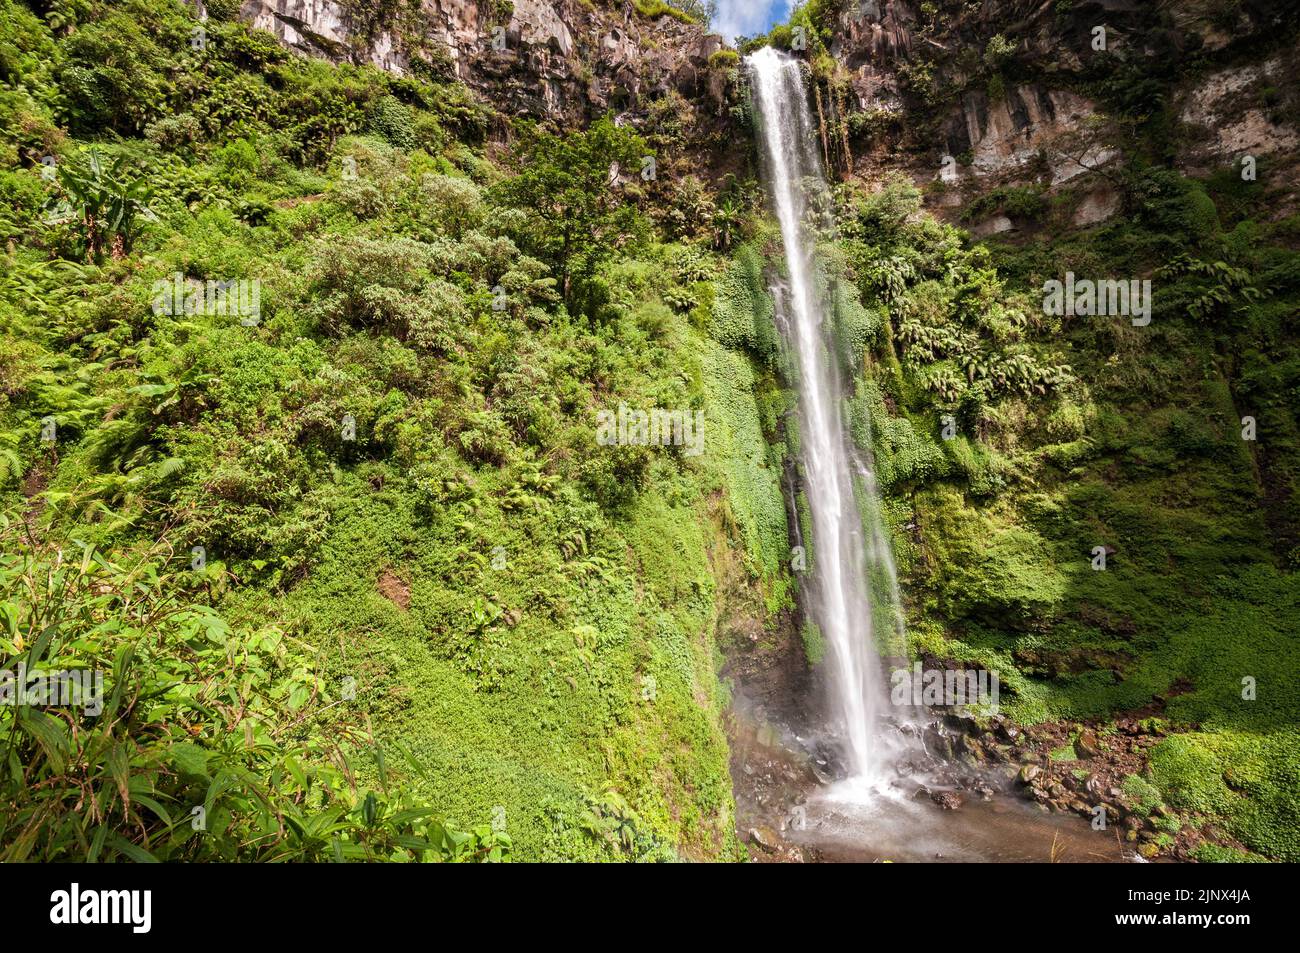 Coban Rondo Waterfall near Pujon, East Java province, Indonesia Stock Photo